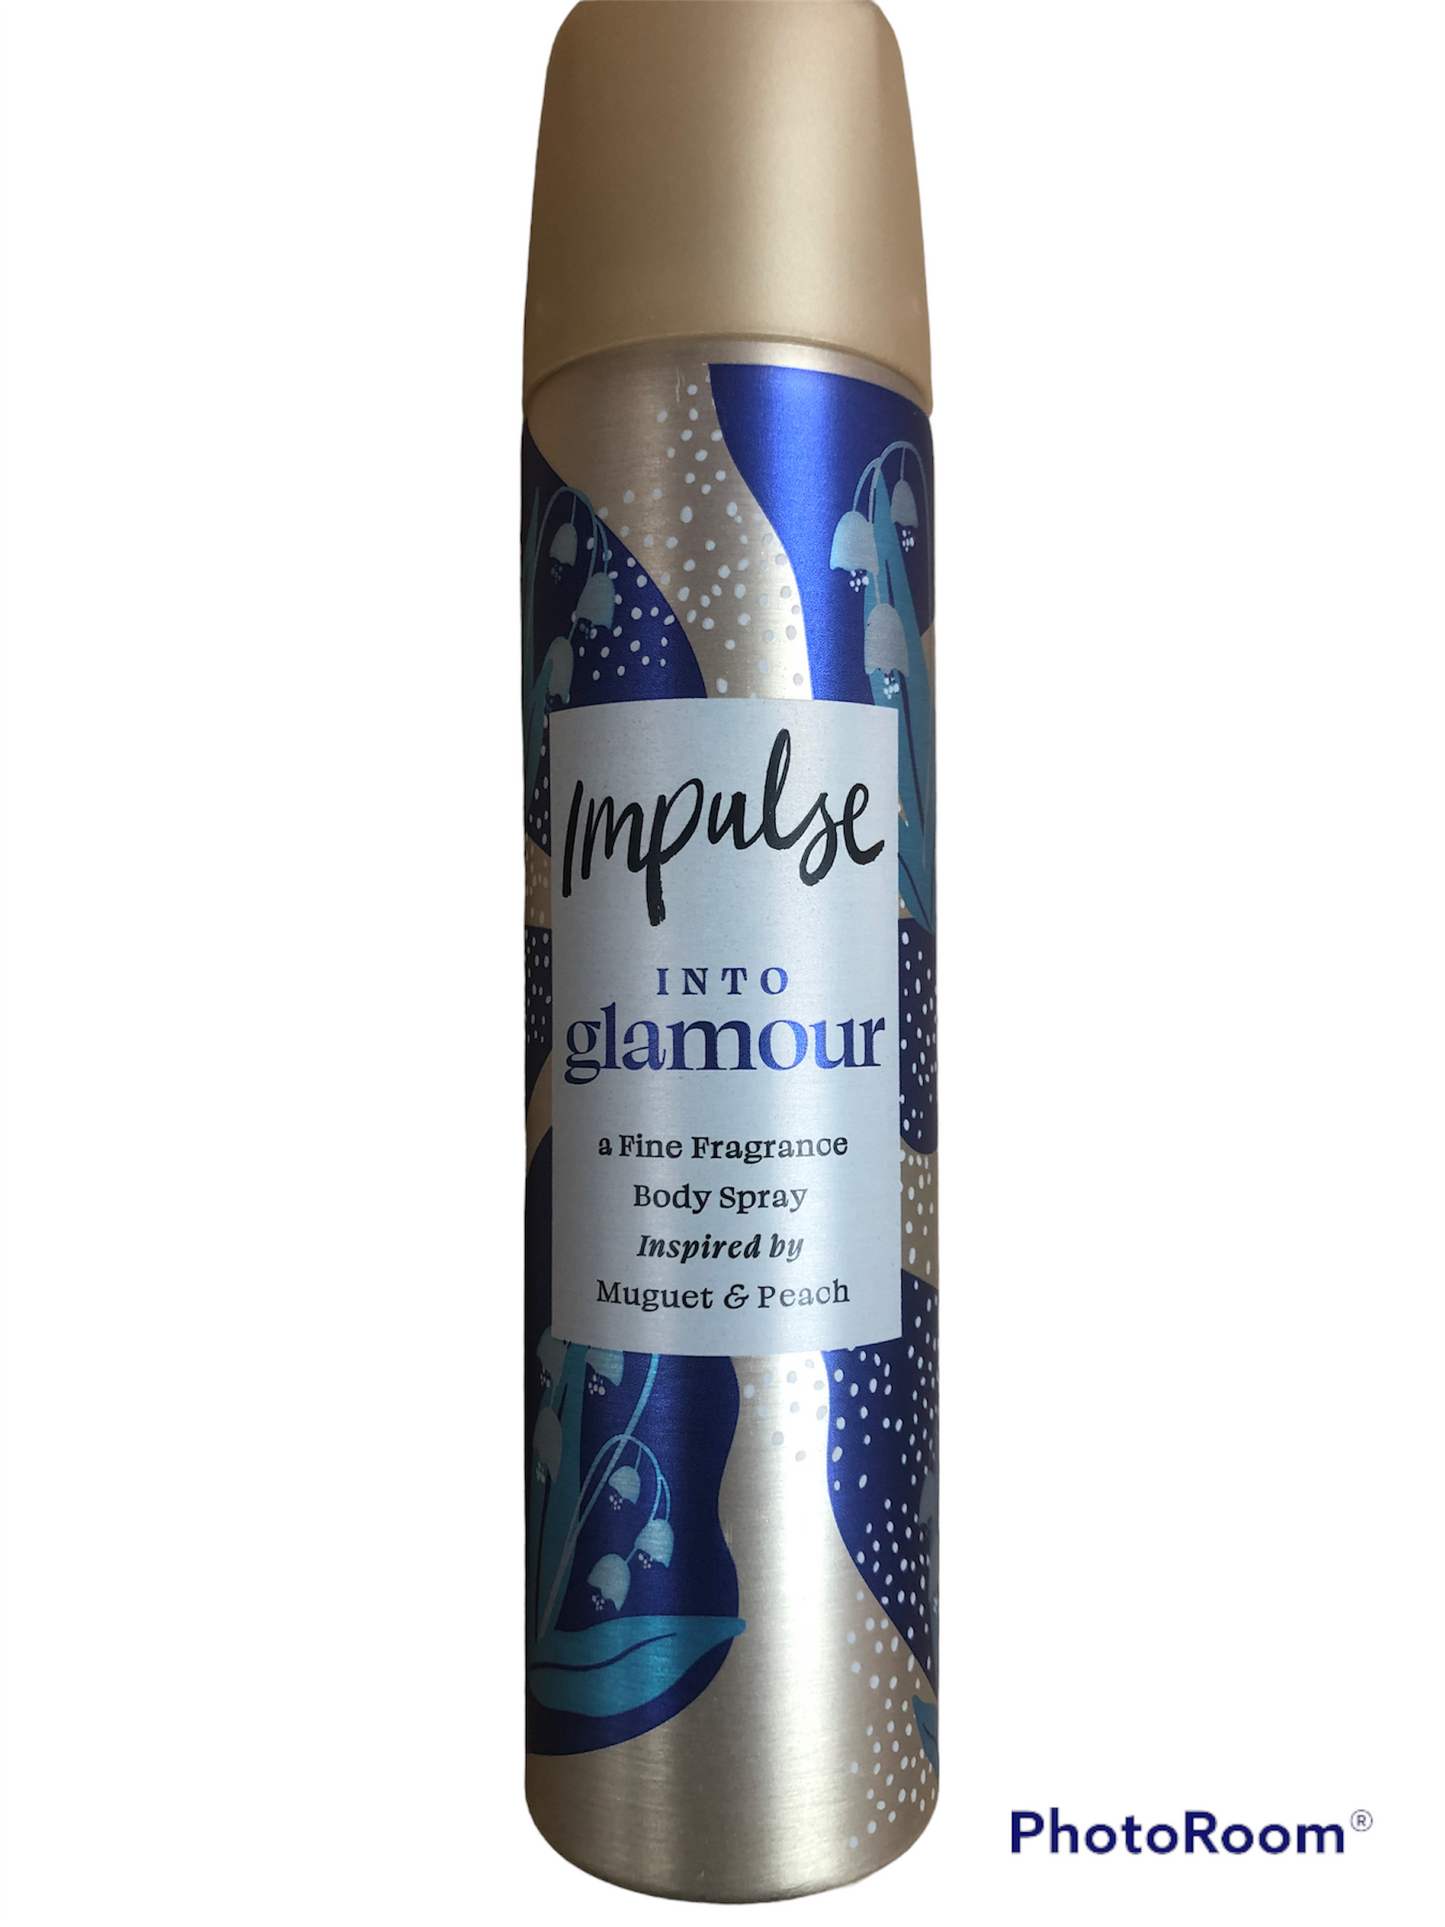 Impulse into glamour body spray 75ml